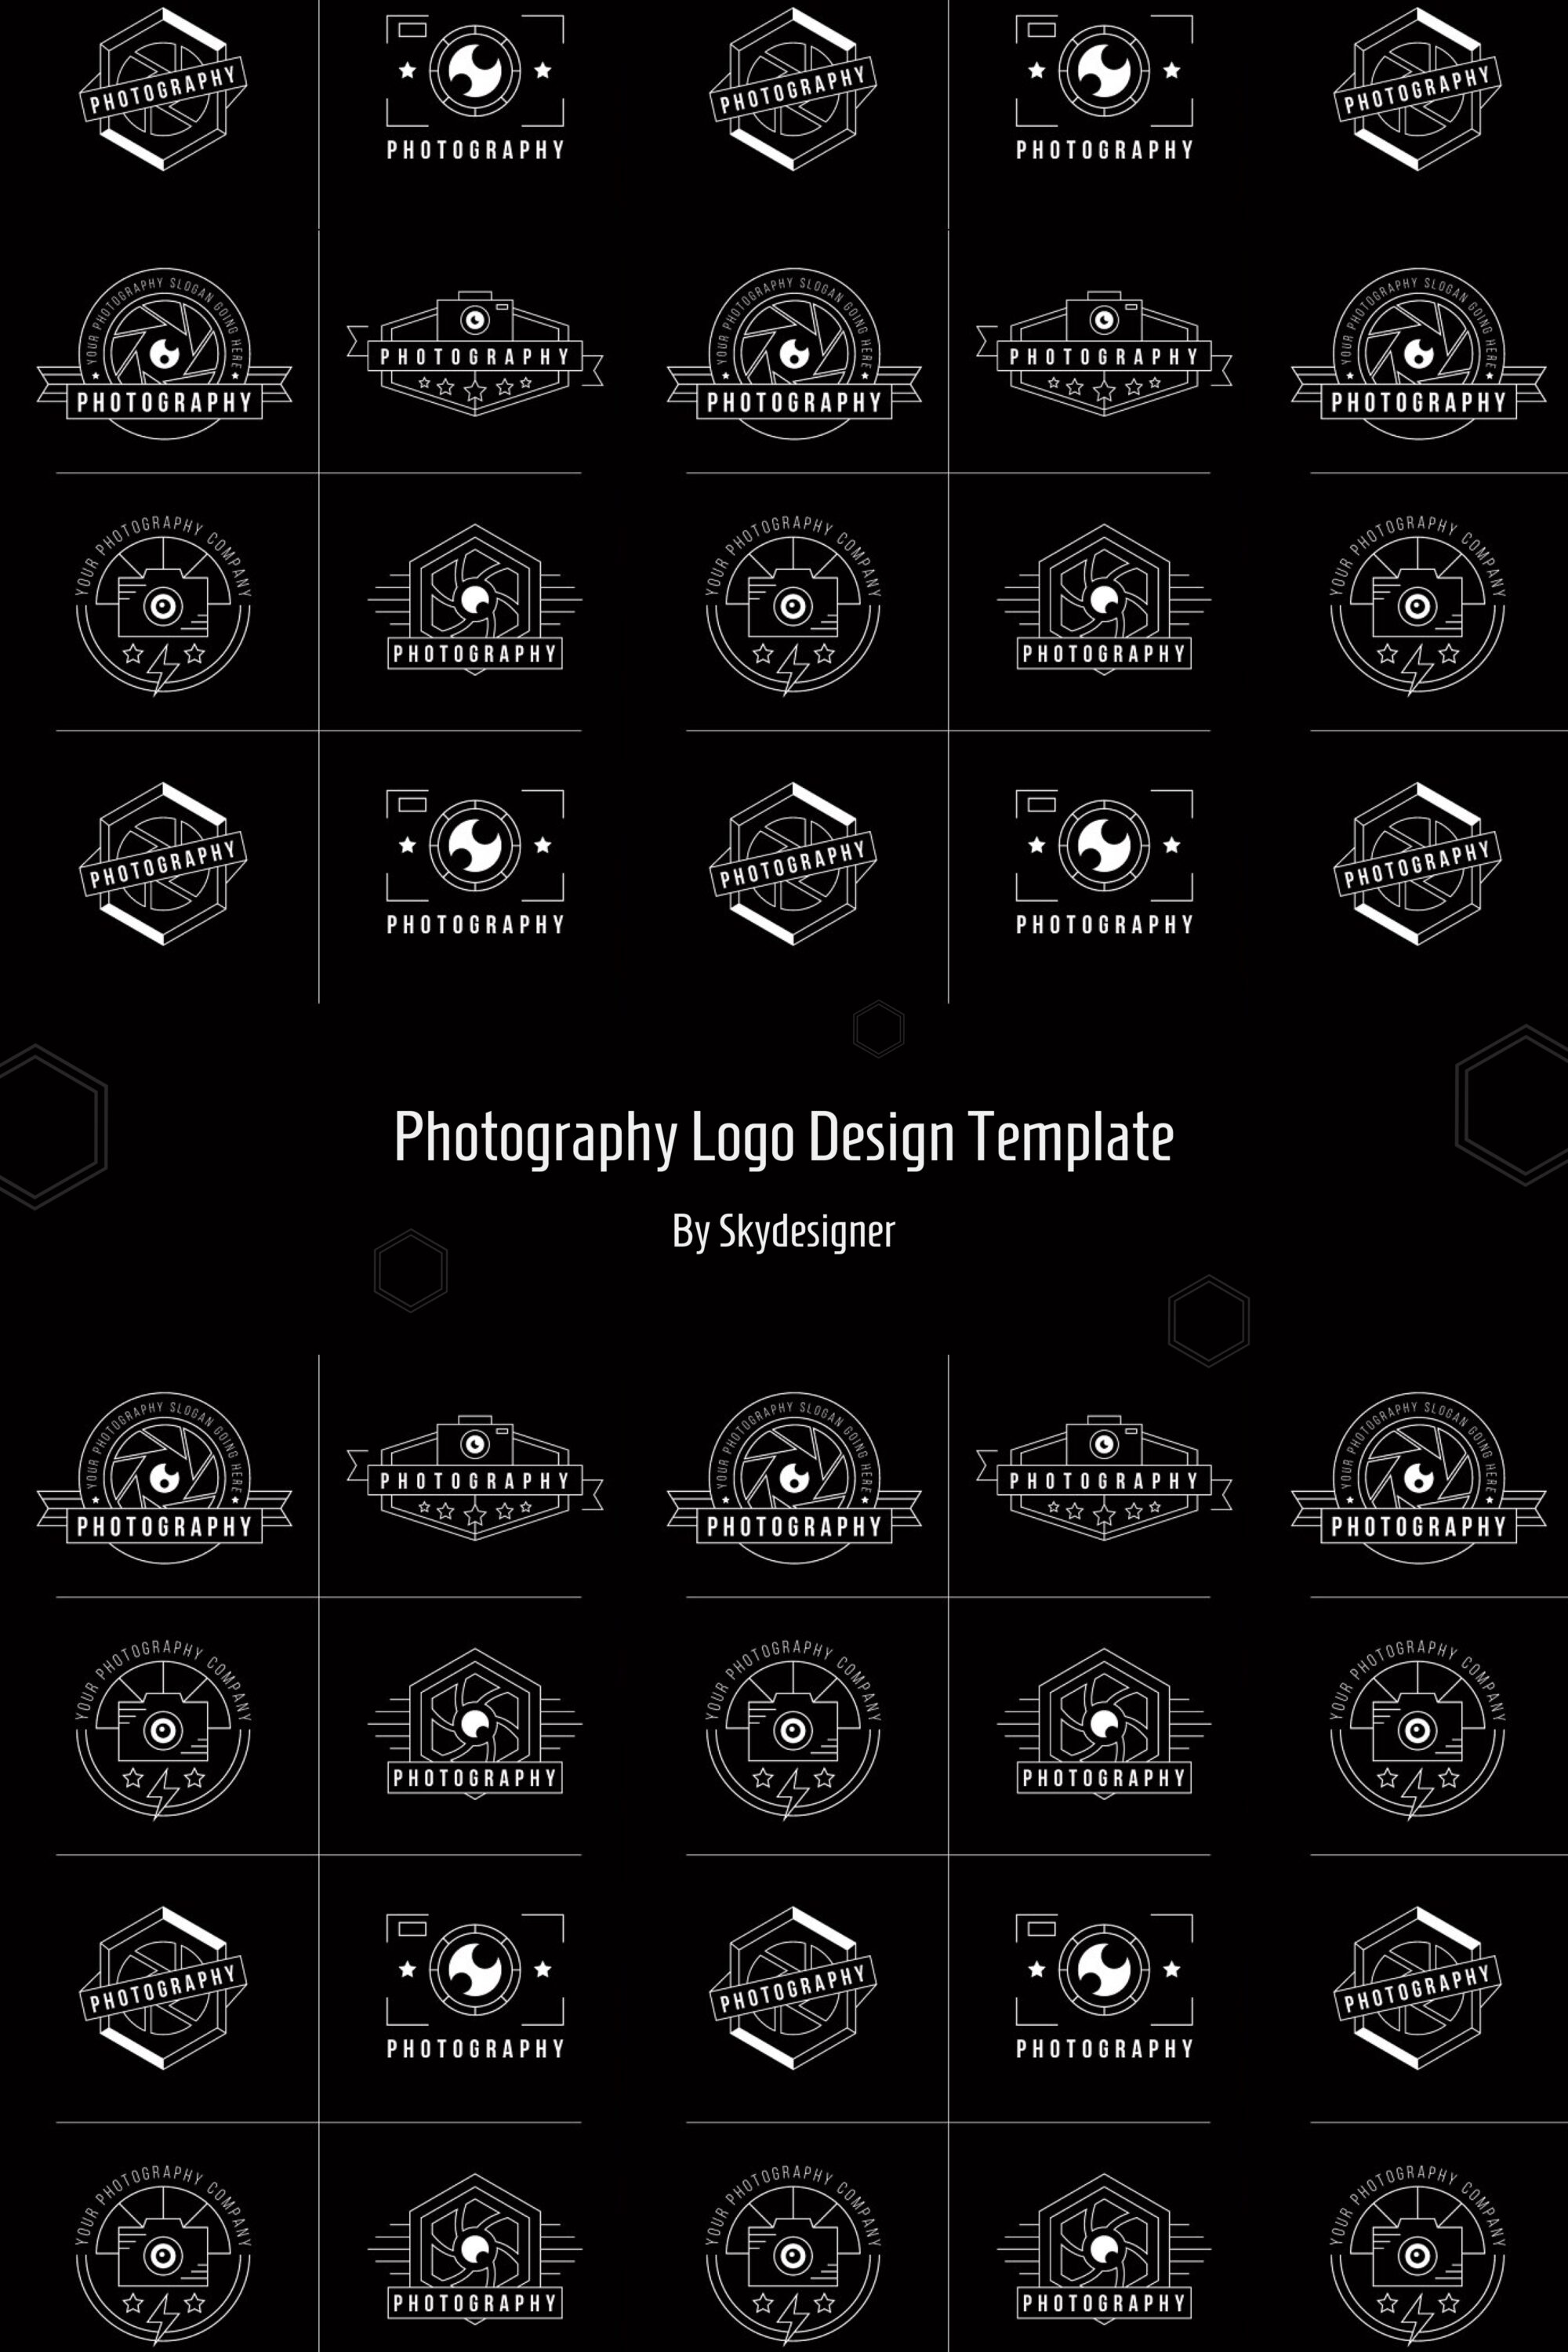 Photography logo design template of pinterest.